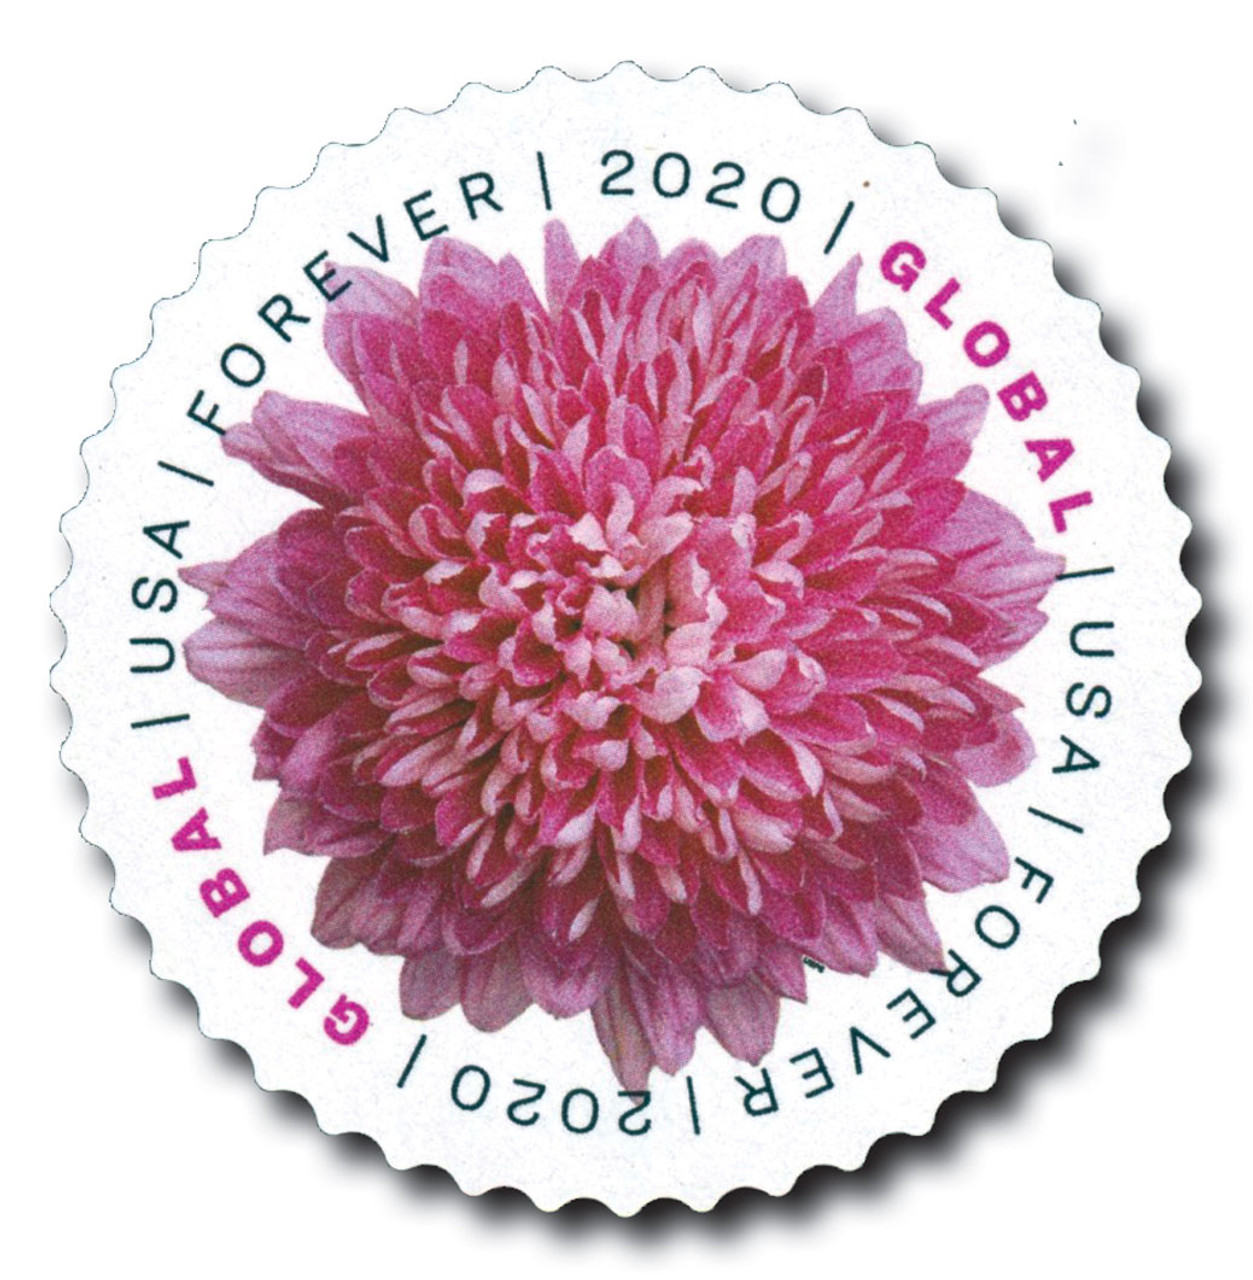 4740/5460 - 2013-20 Global Forever stamps, complete set of 8